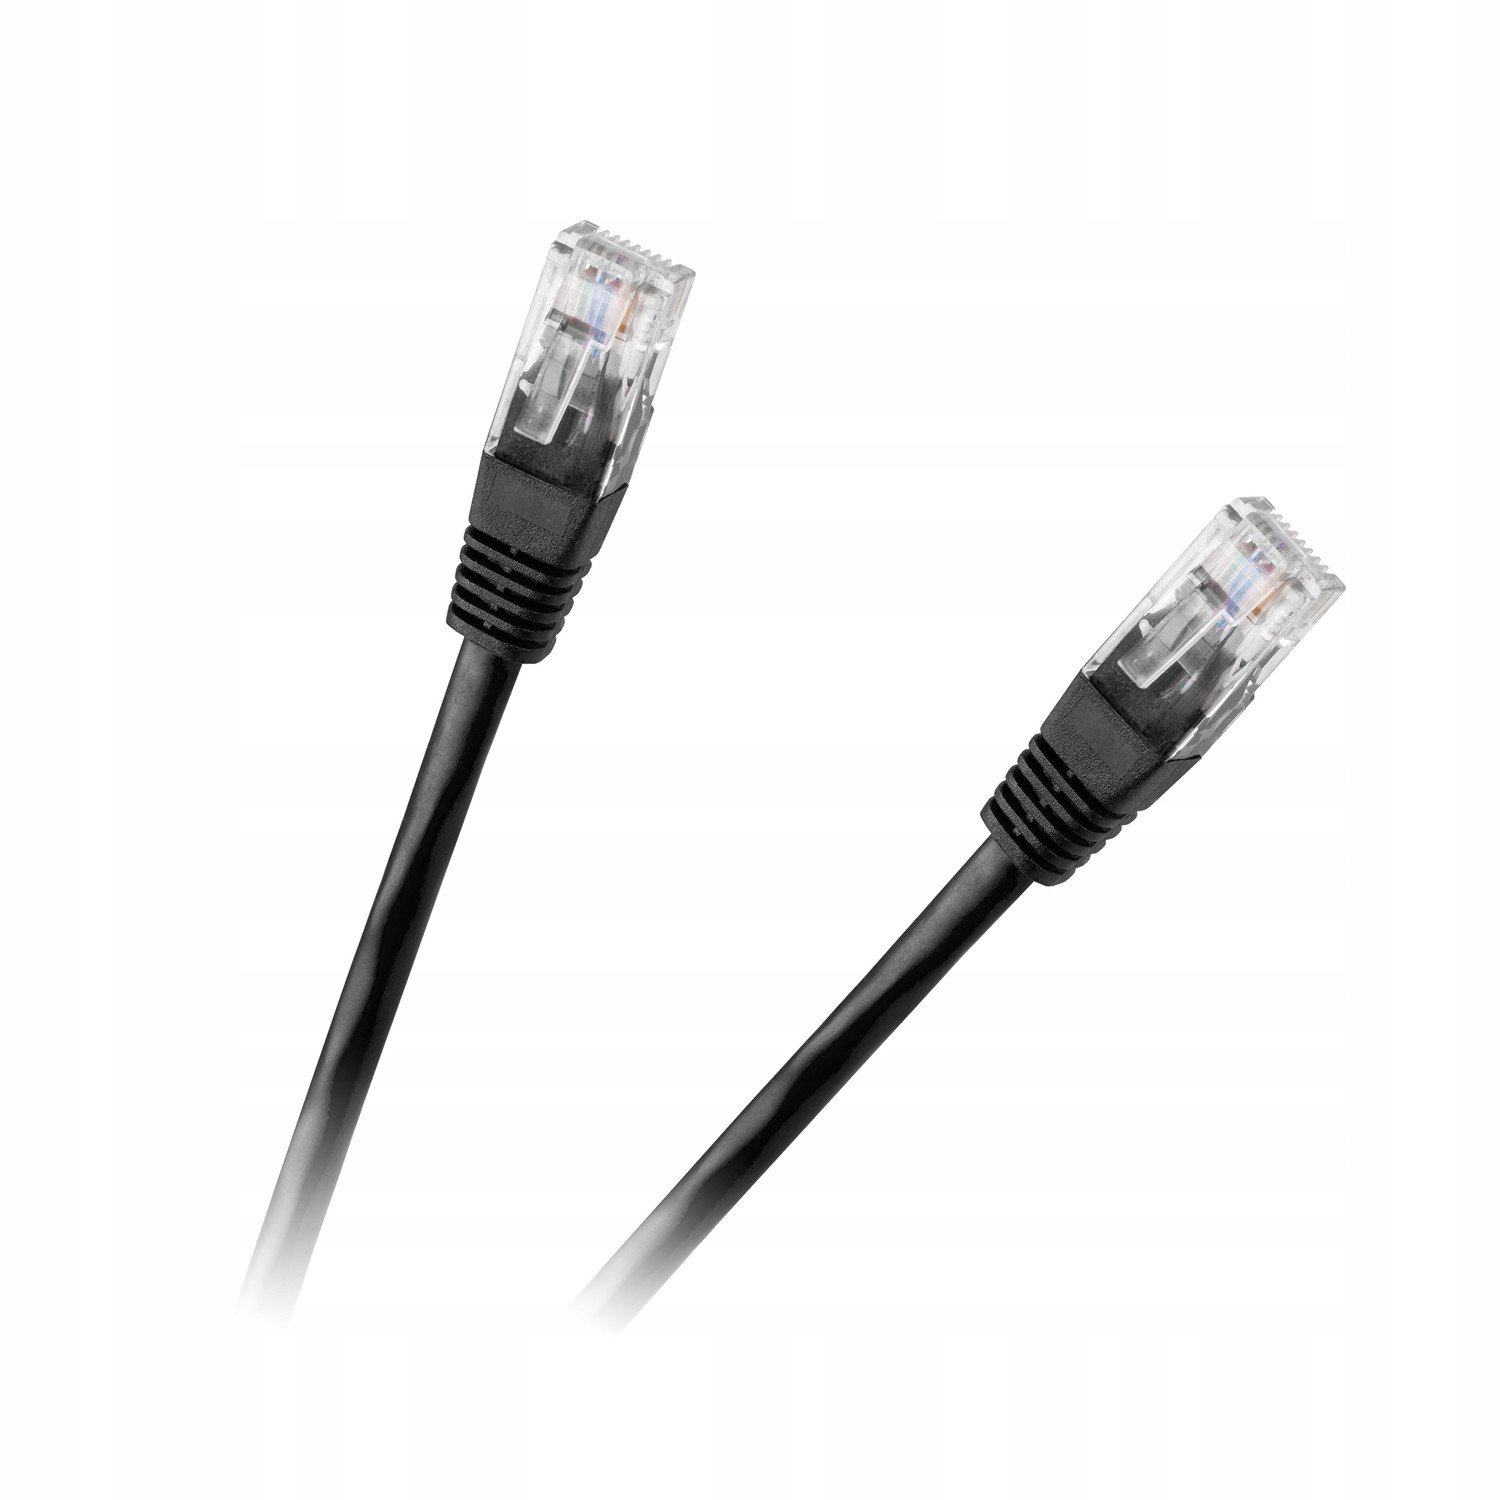 Patchcord síťový kabel Utp CAT.6 zástrčka zástrčka 3m